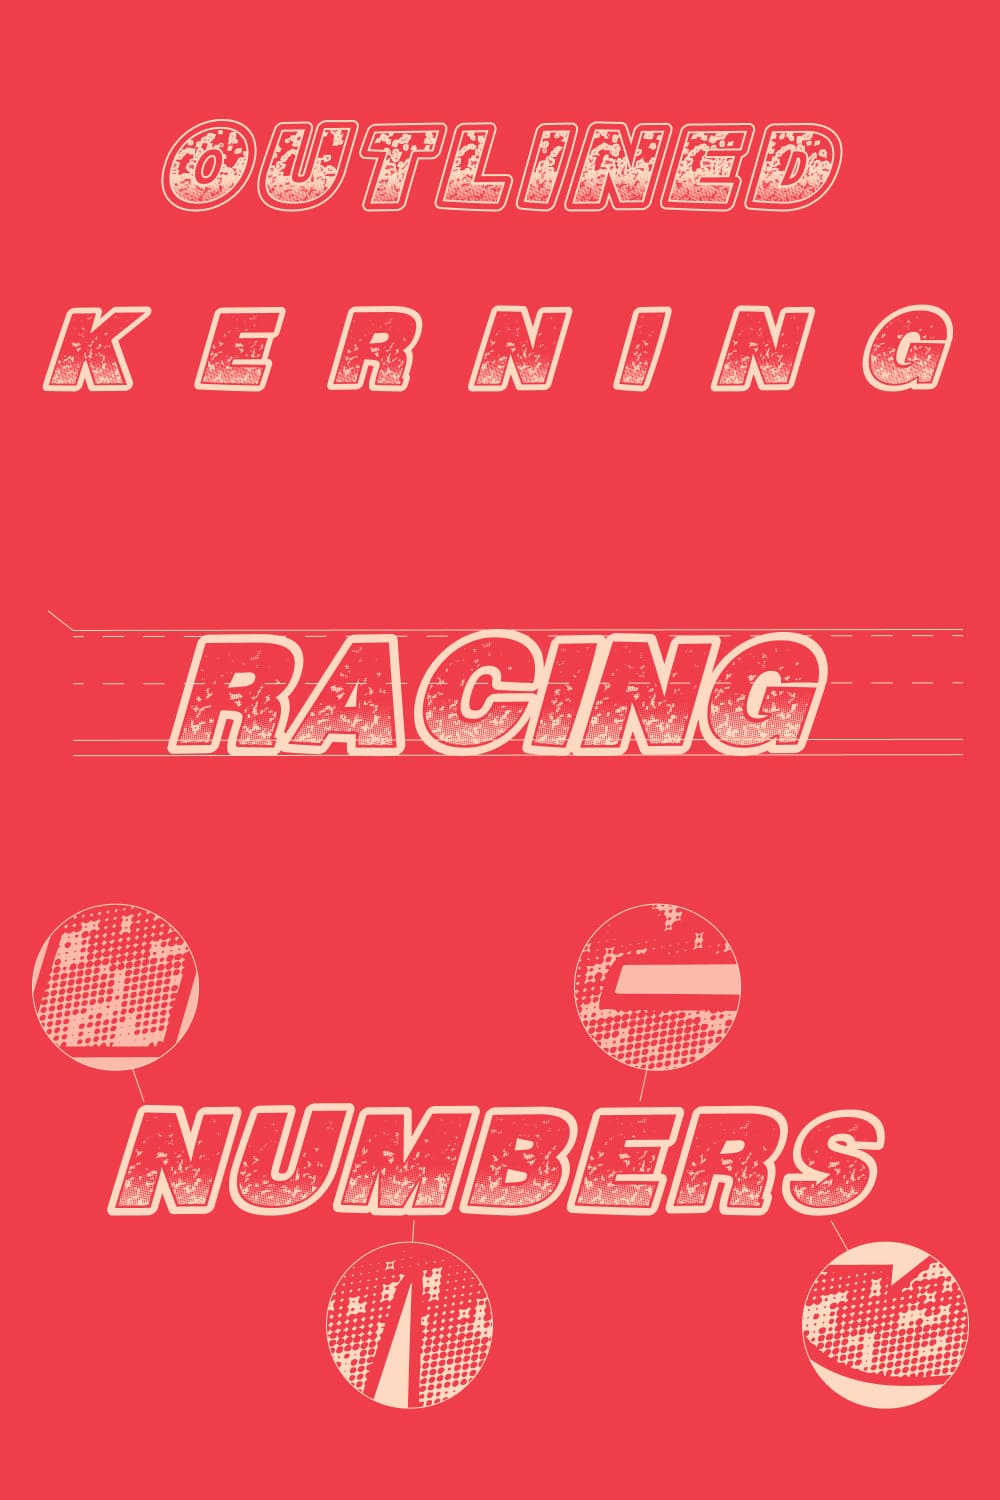 Free racing font - Pinterest.